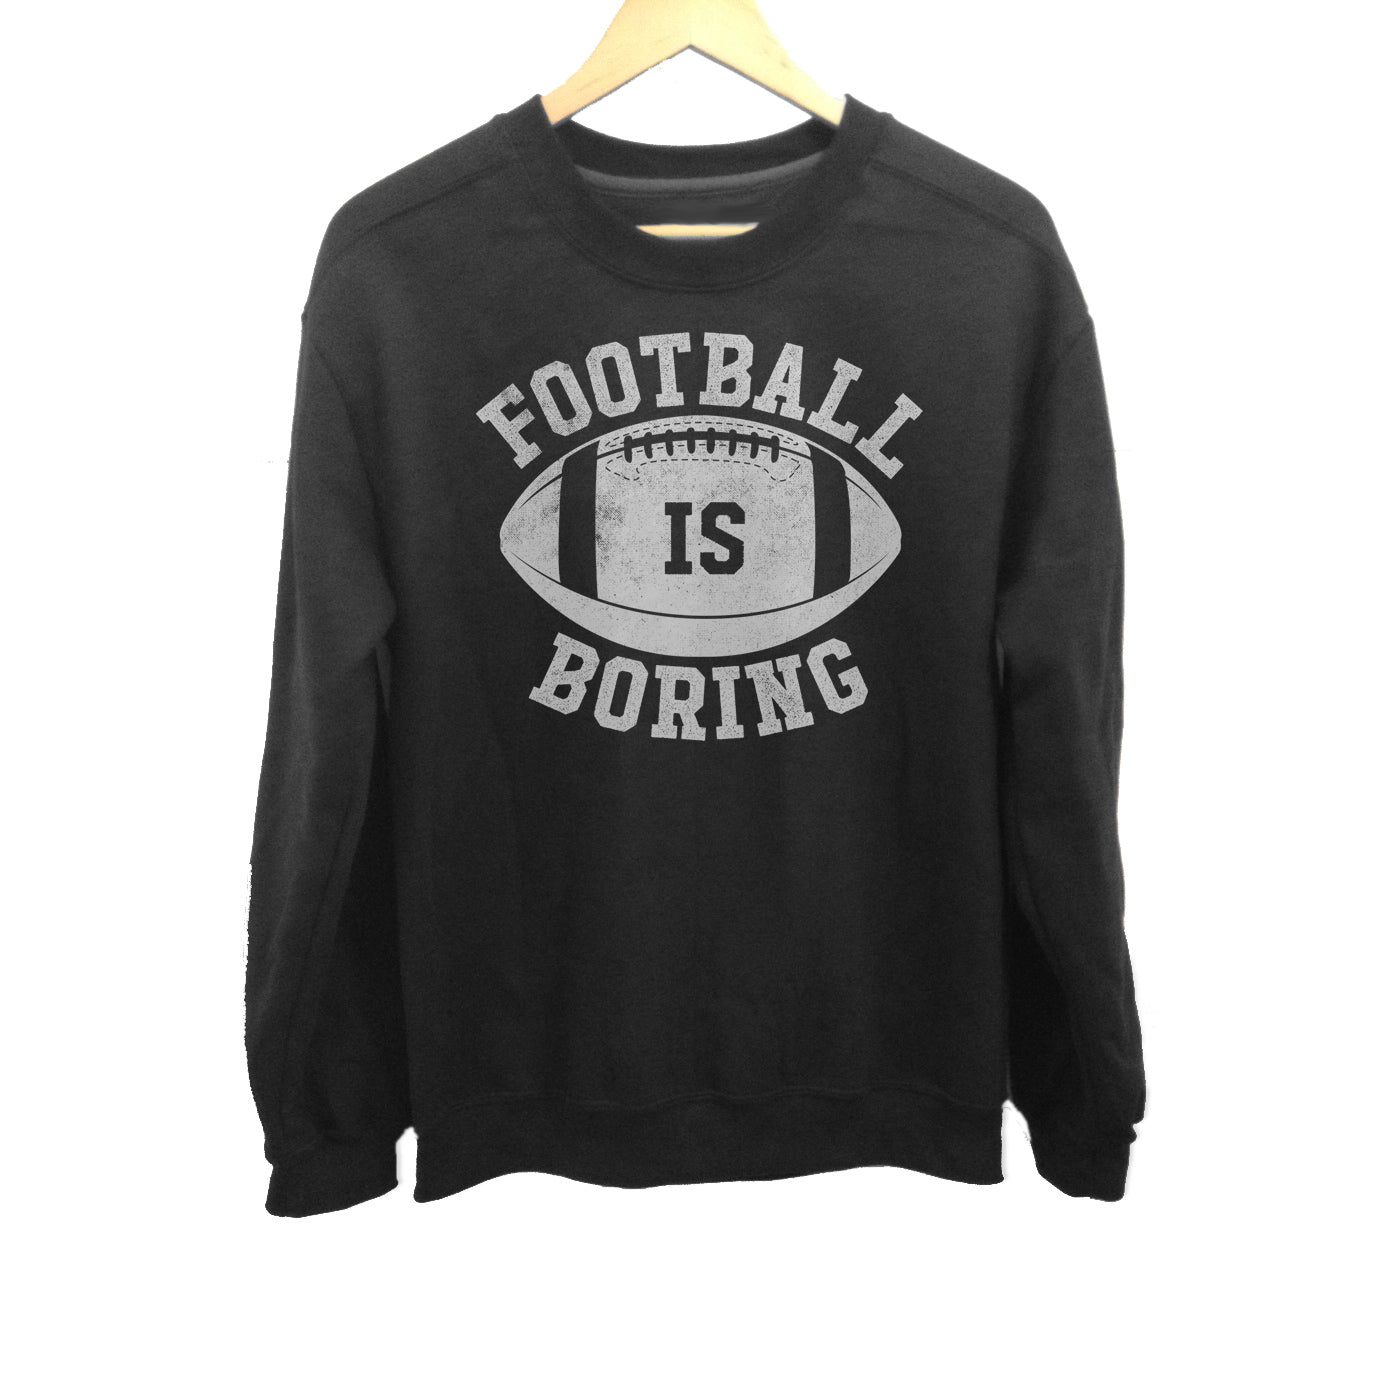 Unisex Football is Boring Sweatshirt - Anti Football Shirt